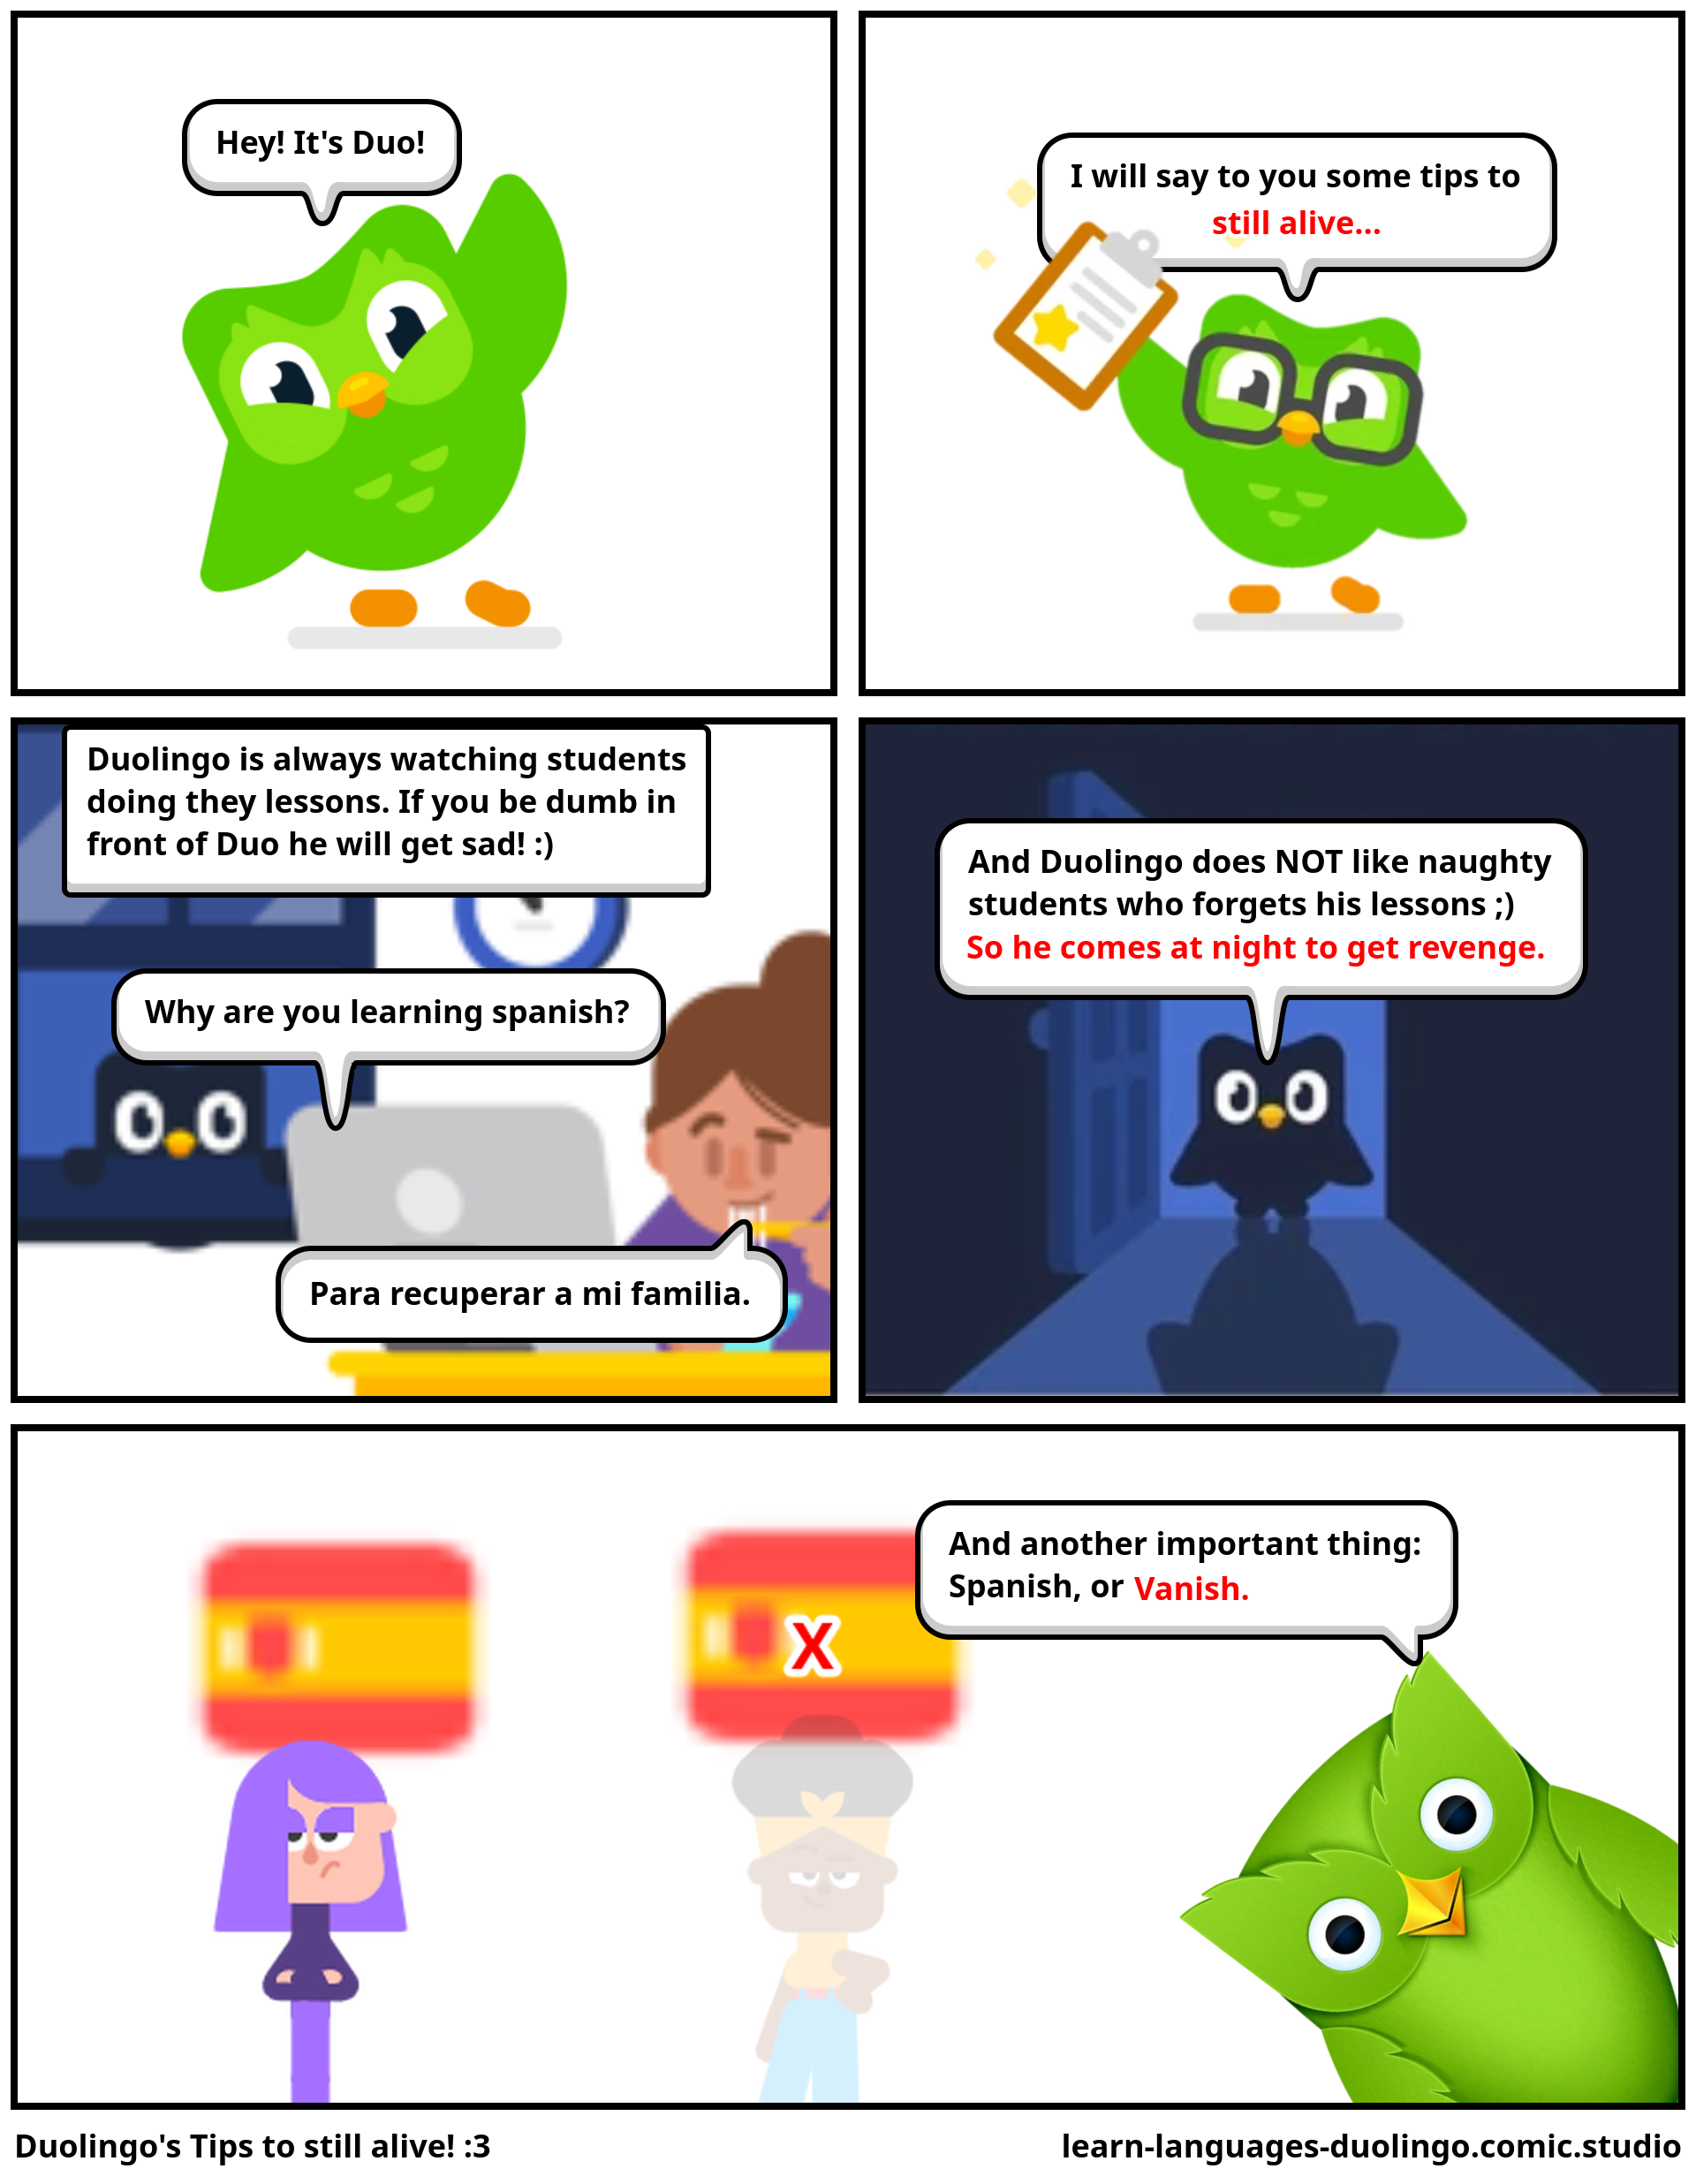 Duolingo's Tips to still alive! :3